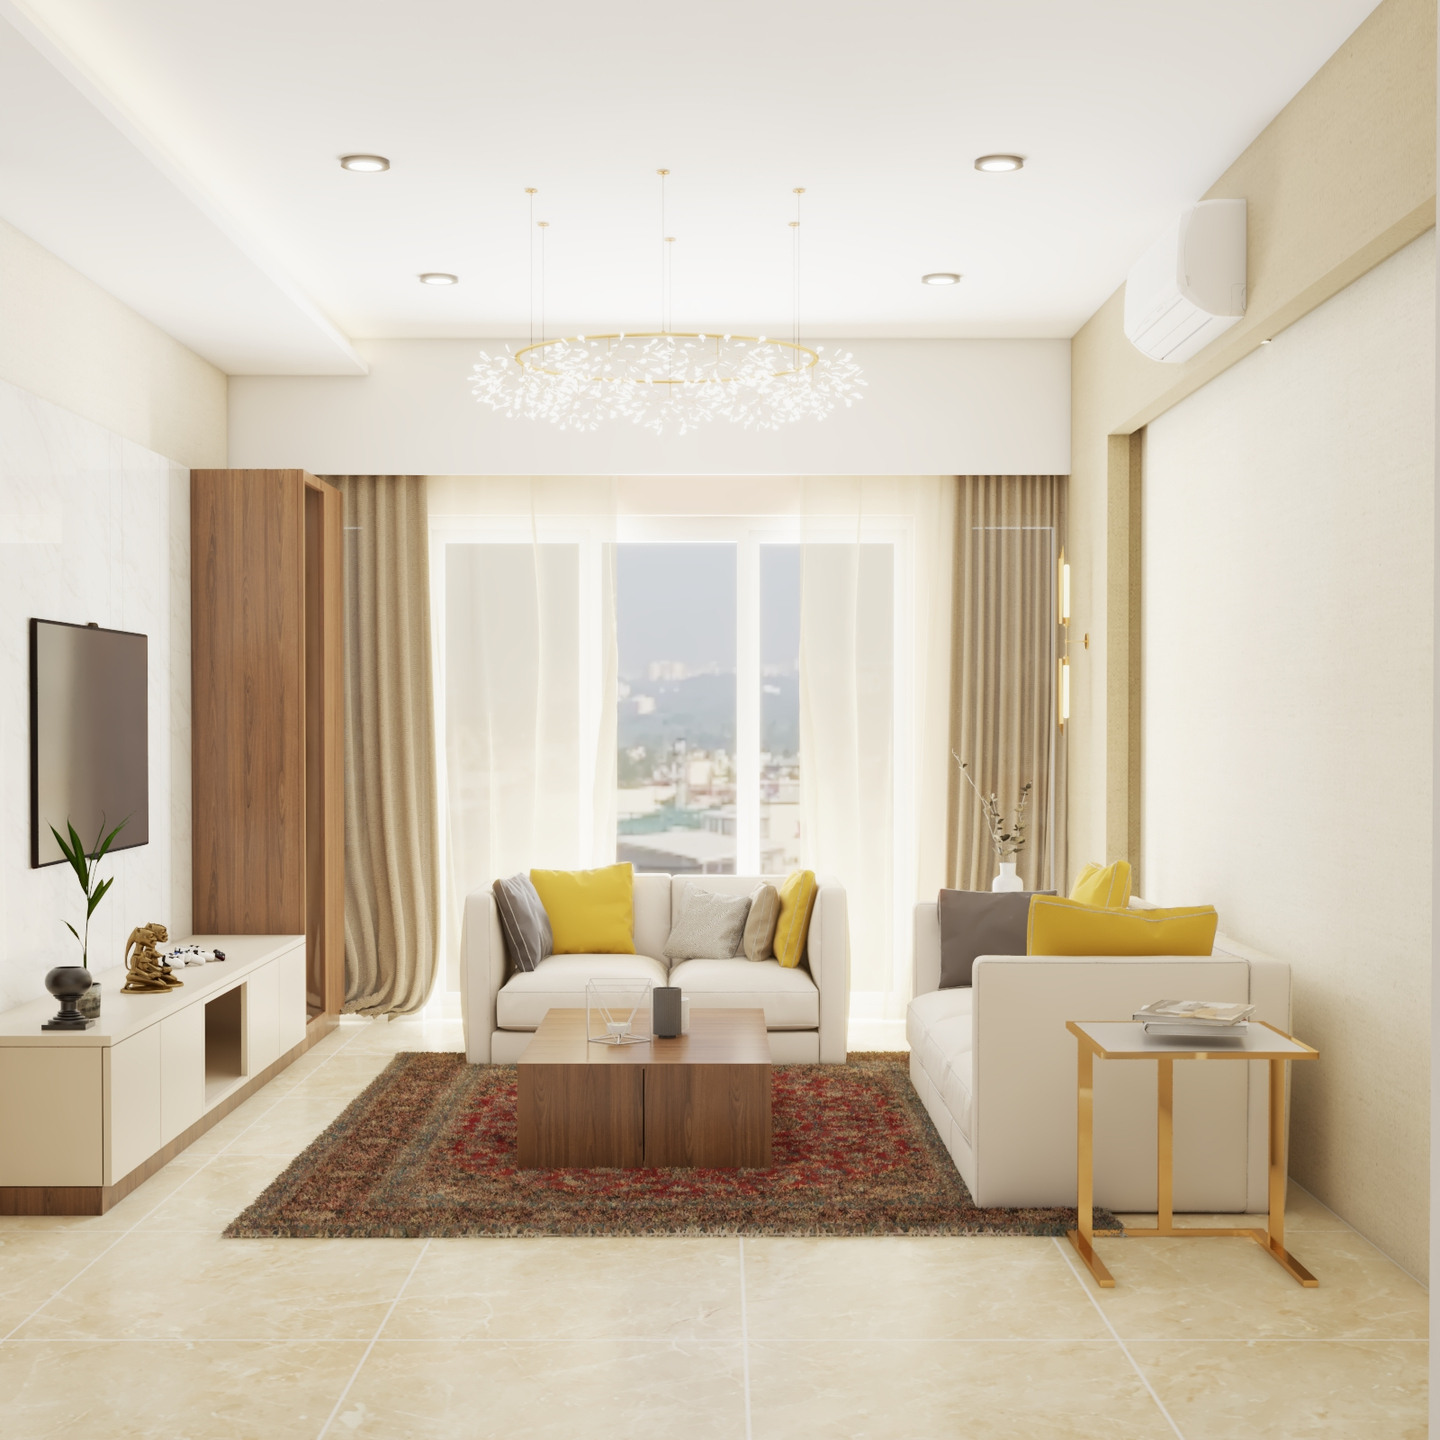 Off-White Living Room Design Idea - Livspace